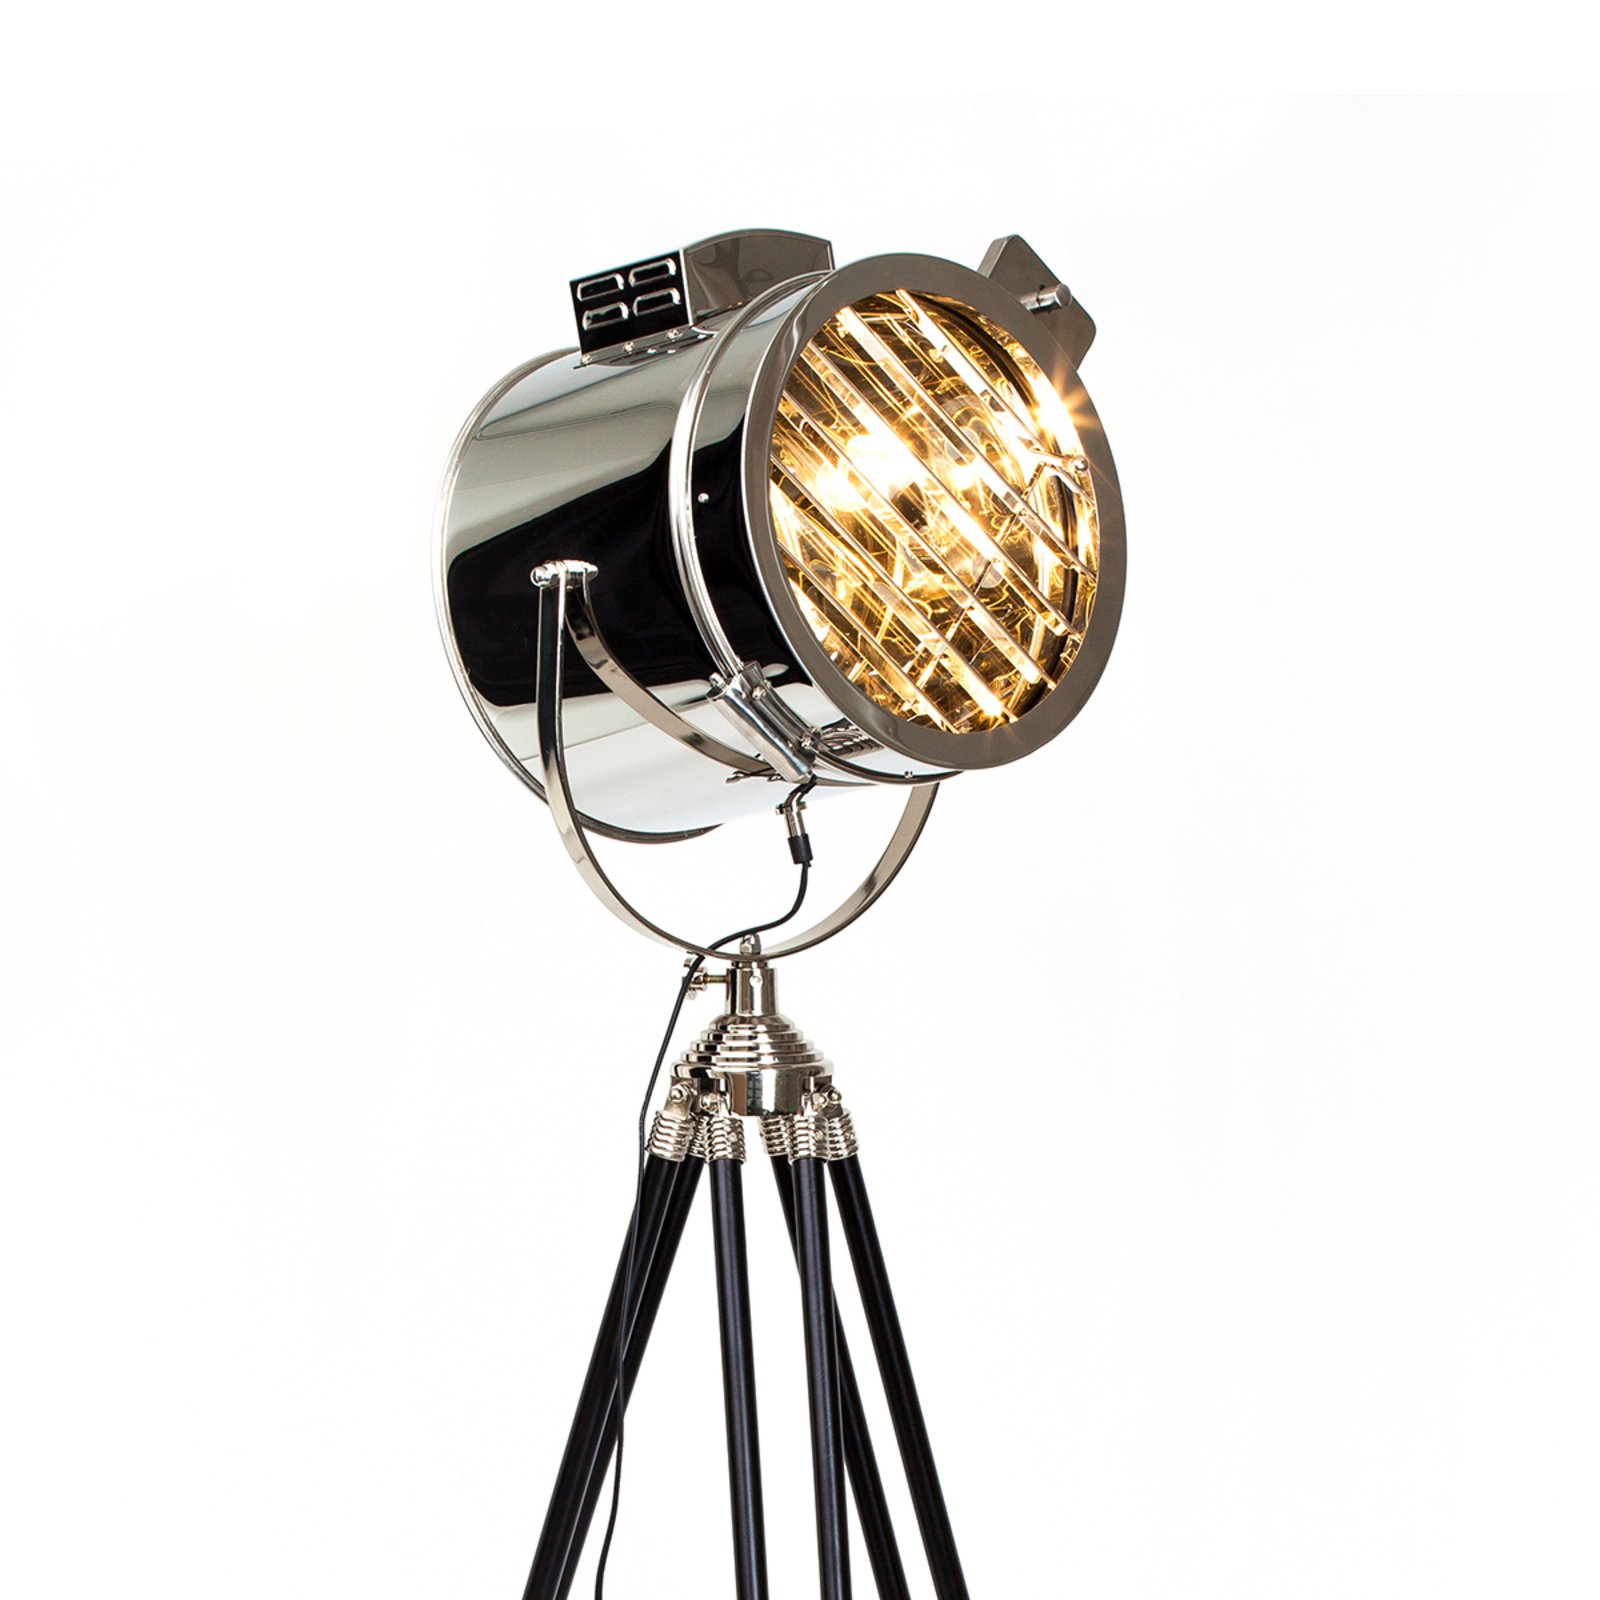 Cine - stojací lampa v designu reflektoru